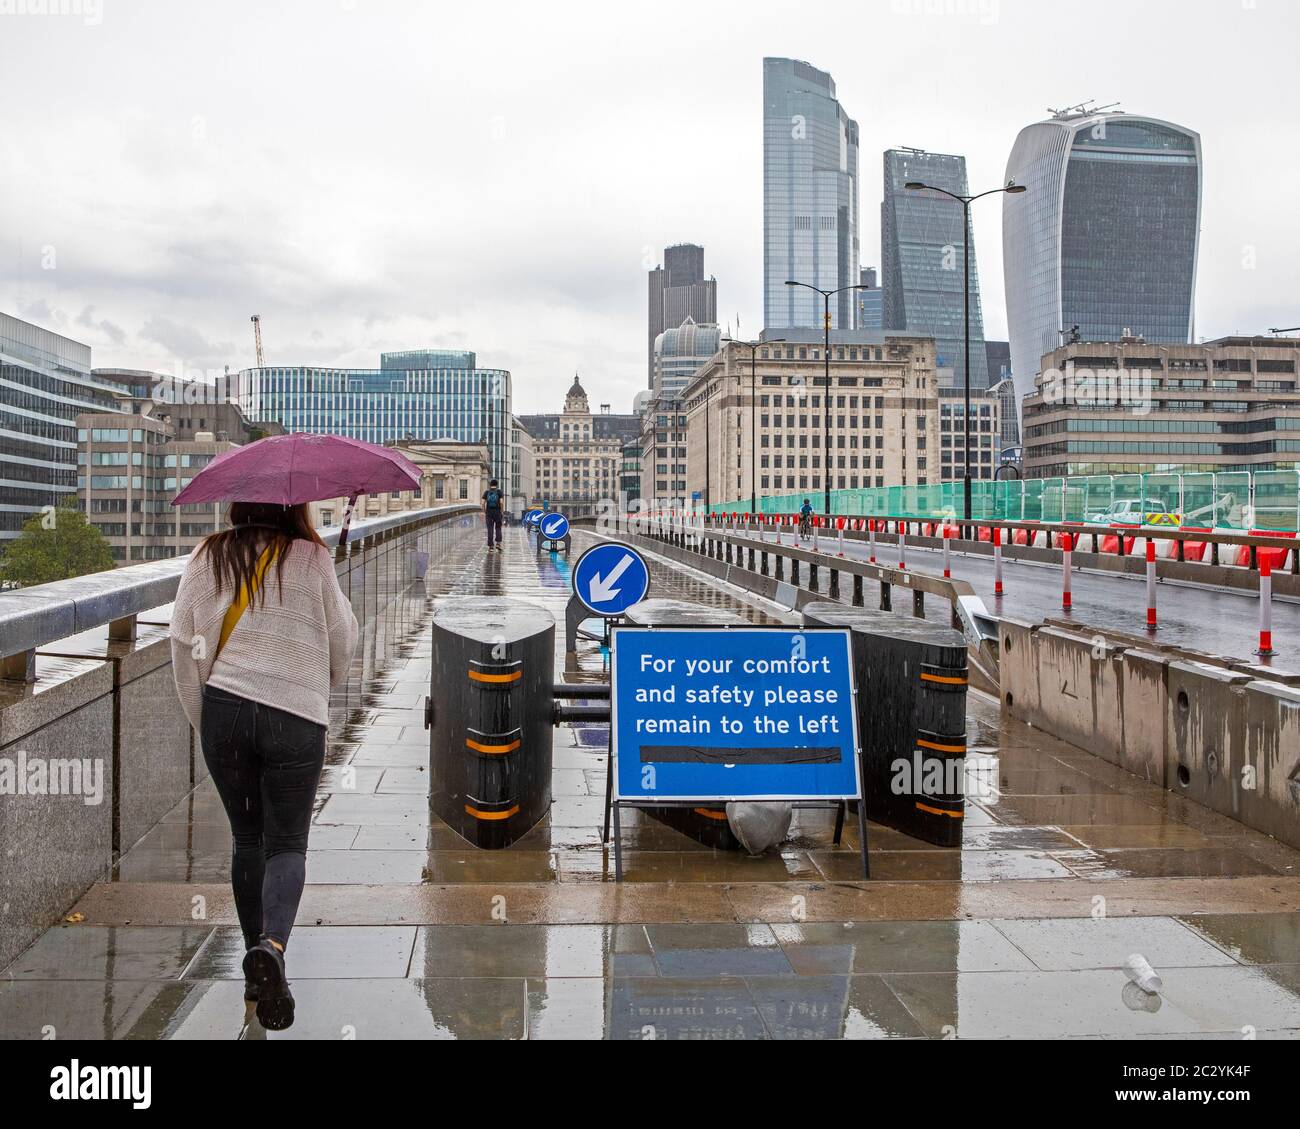 London, UK - June 17th 2020: Walking lanes on London Bridge to help ensure that people follow the social distancing measures during the Coronavirus pa Stock Photo